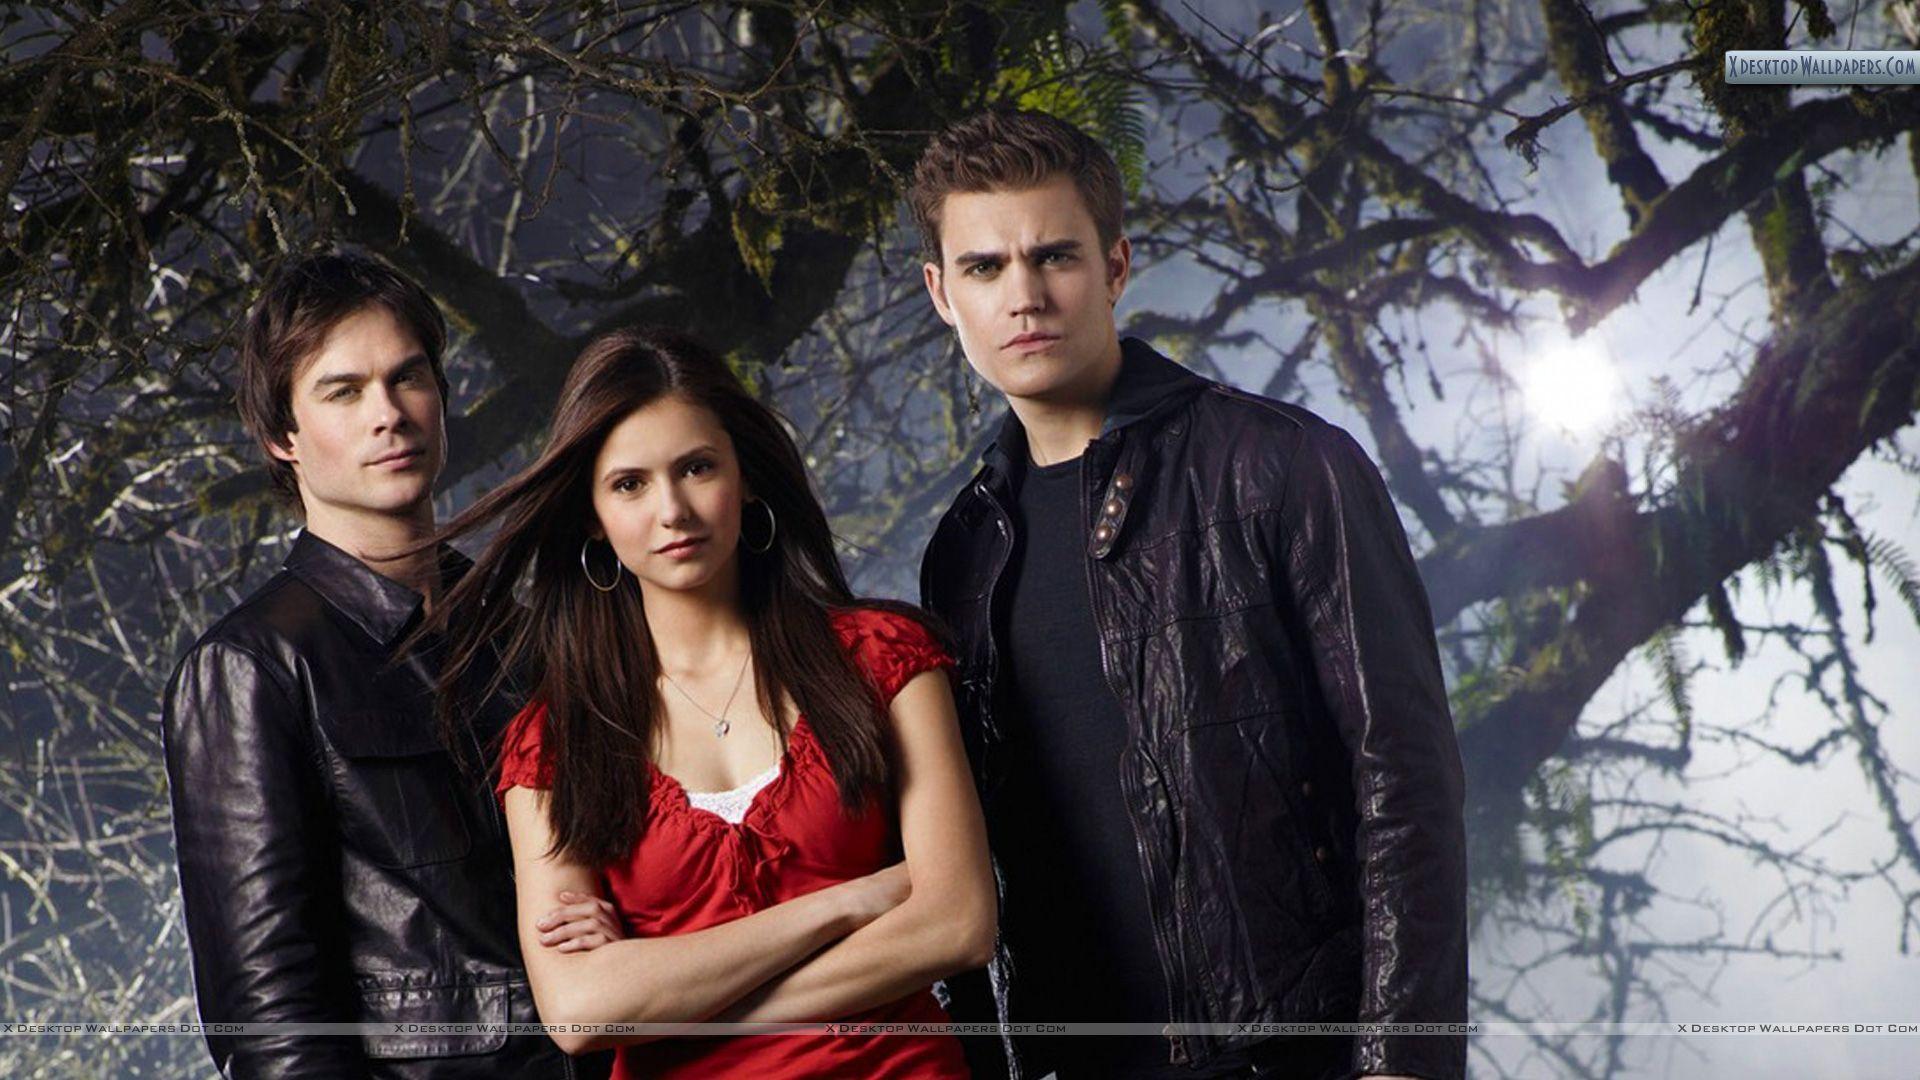 The Vampire Diaries Wallpaper, Photo & Image in HD